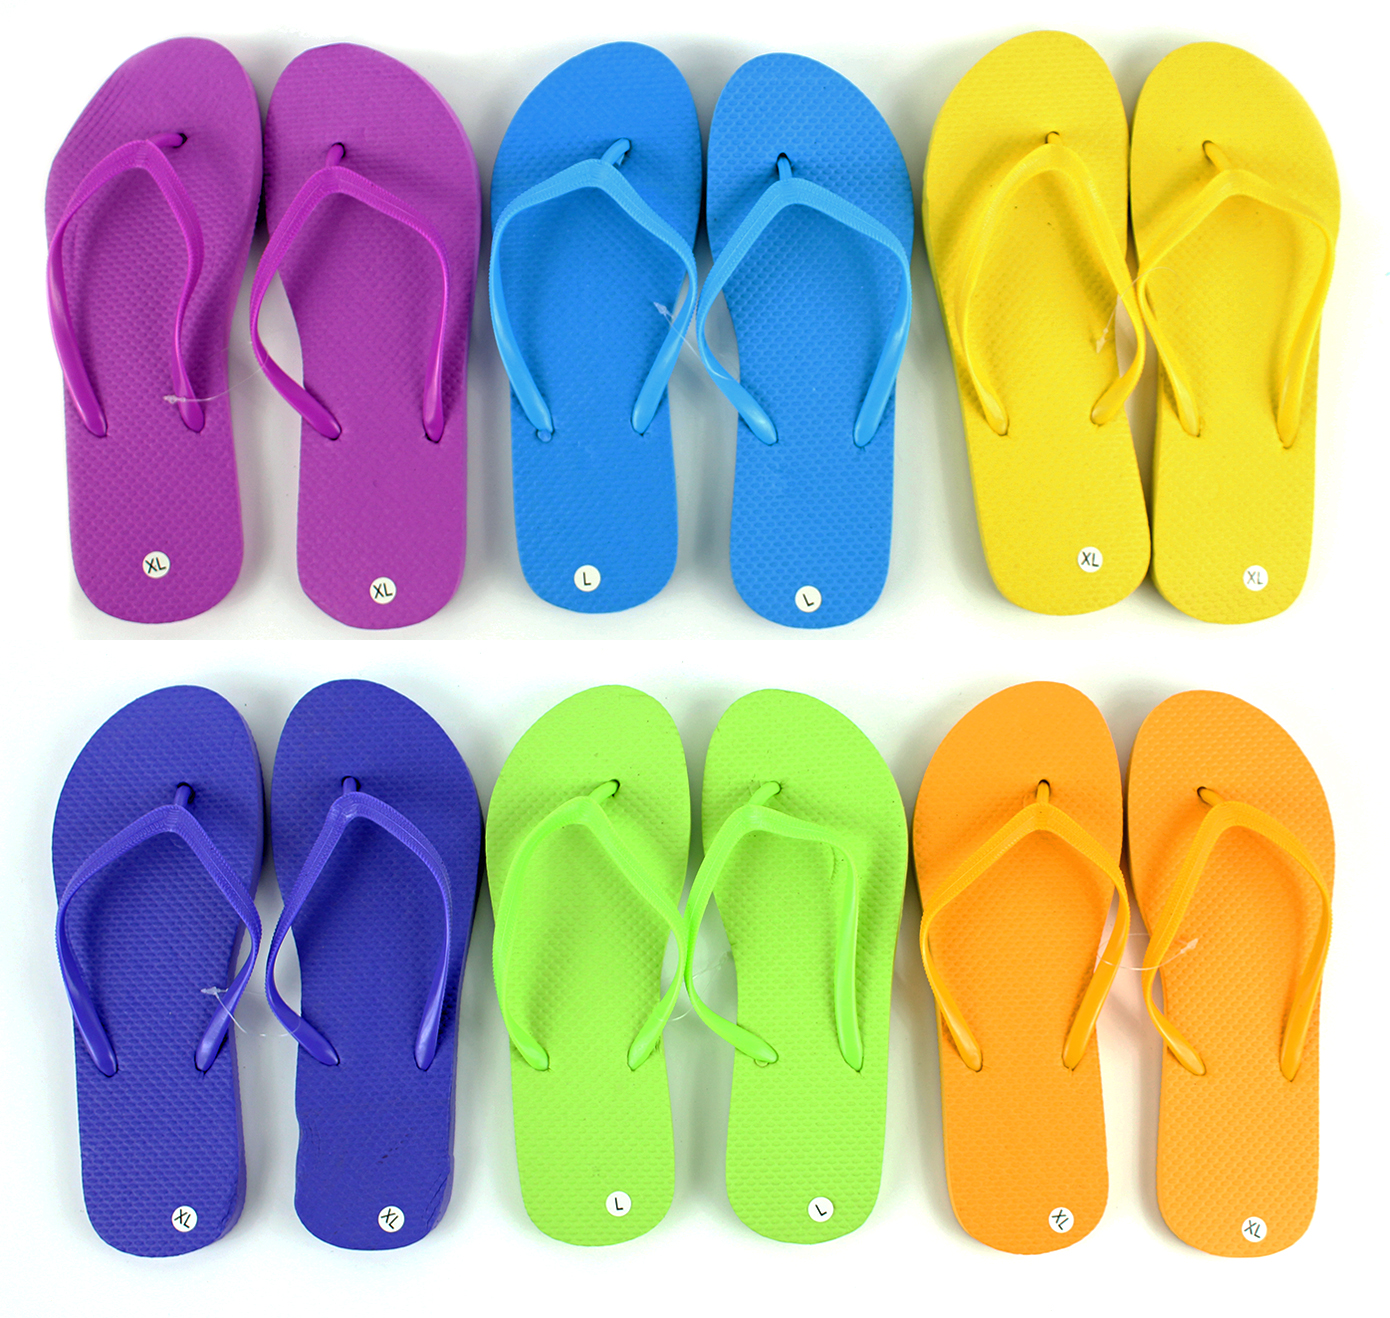 Wholesale Flip Flops & Sandals in Bulk | Eros Wholesale | eroswholesale.com